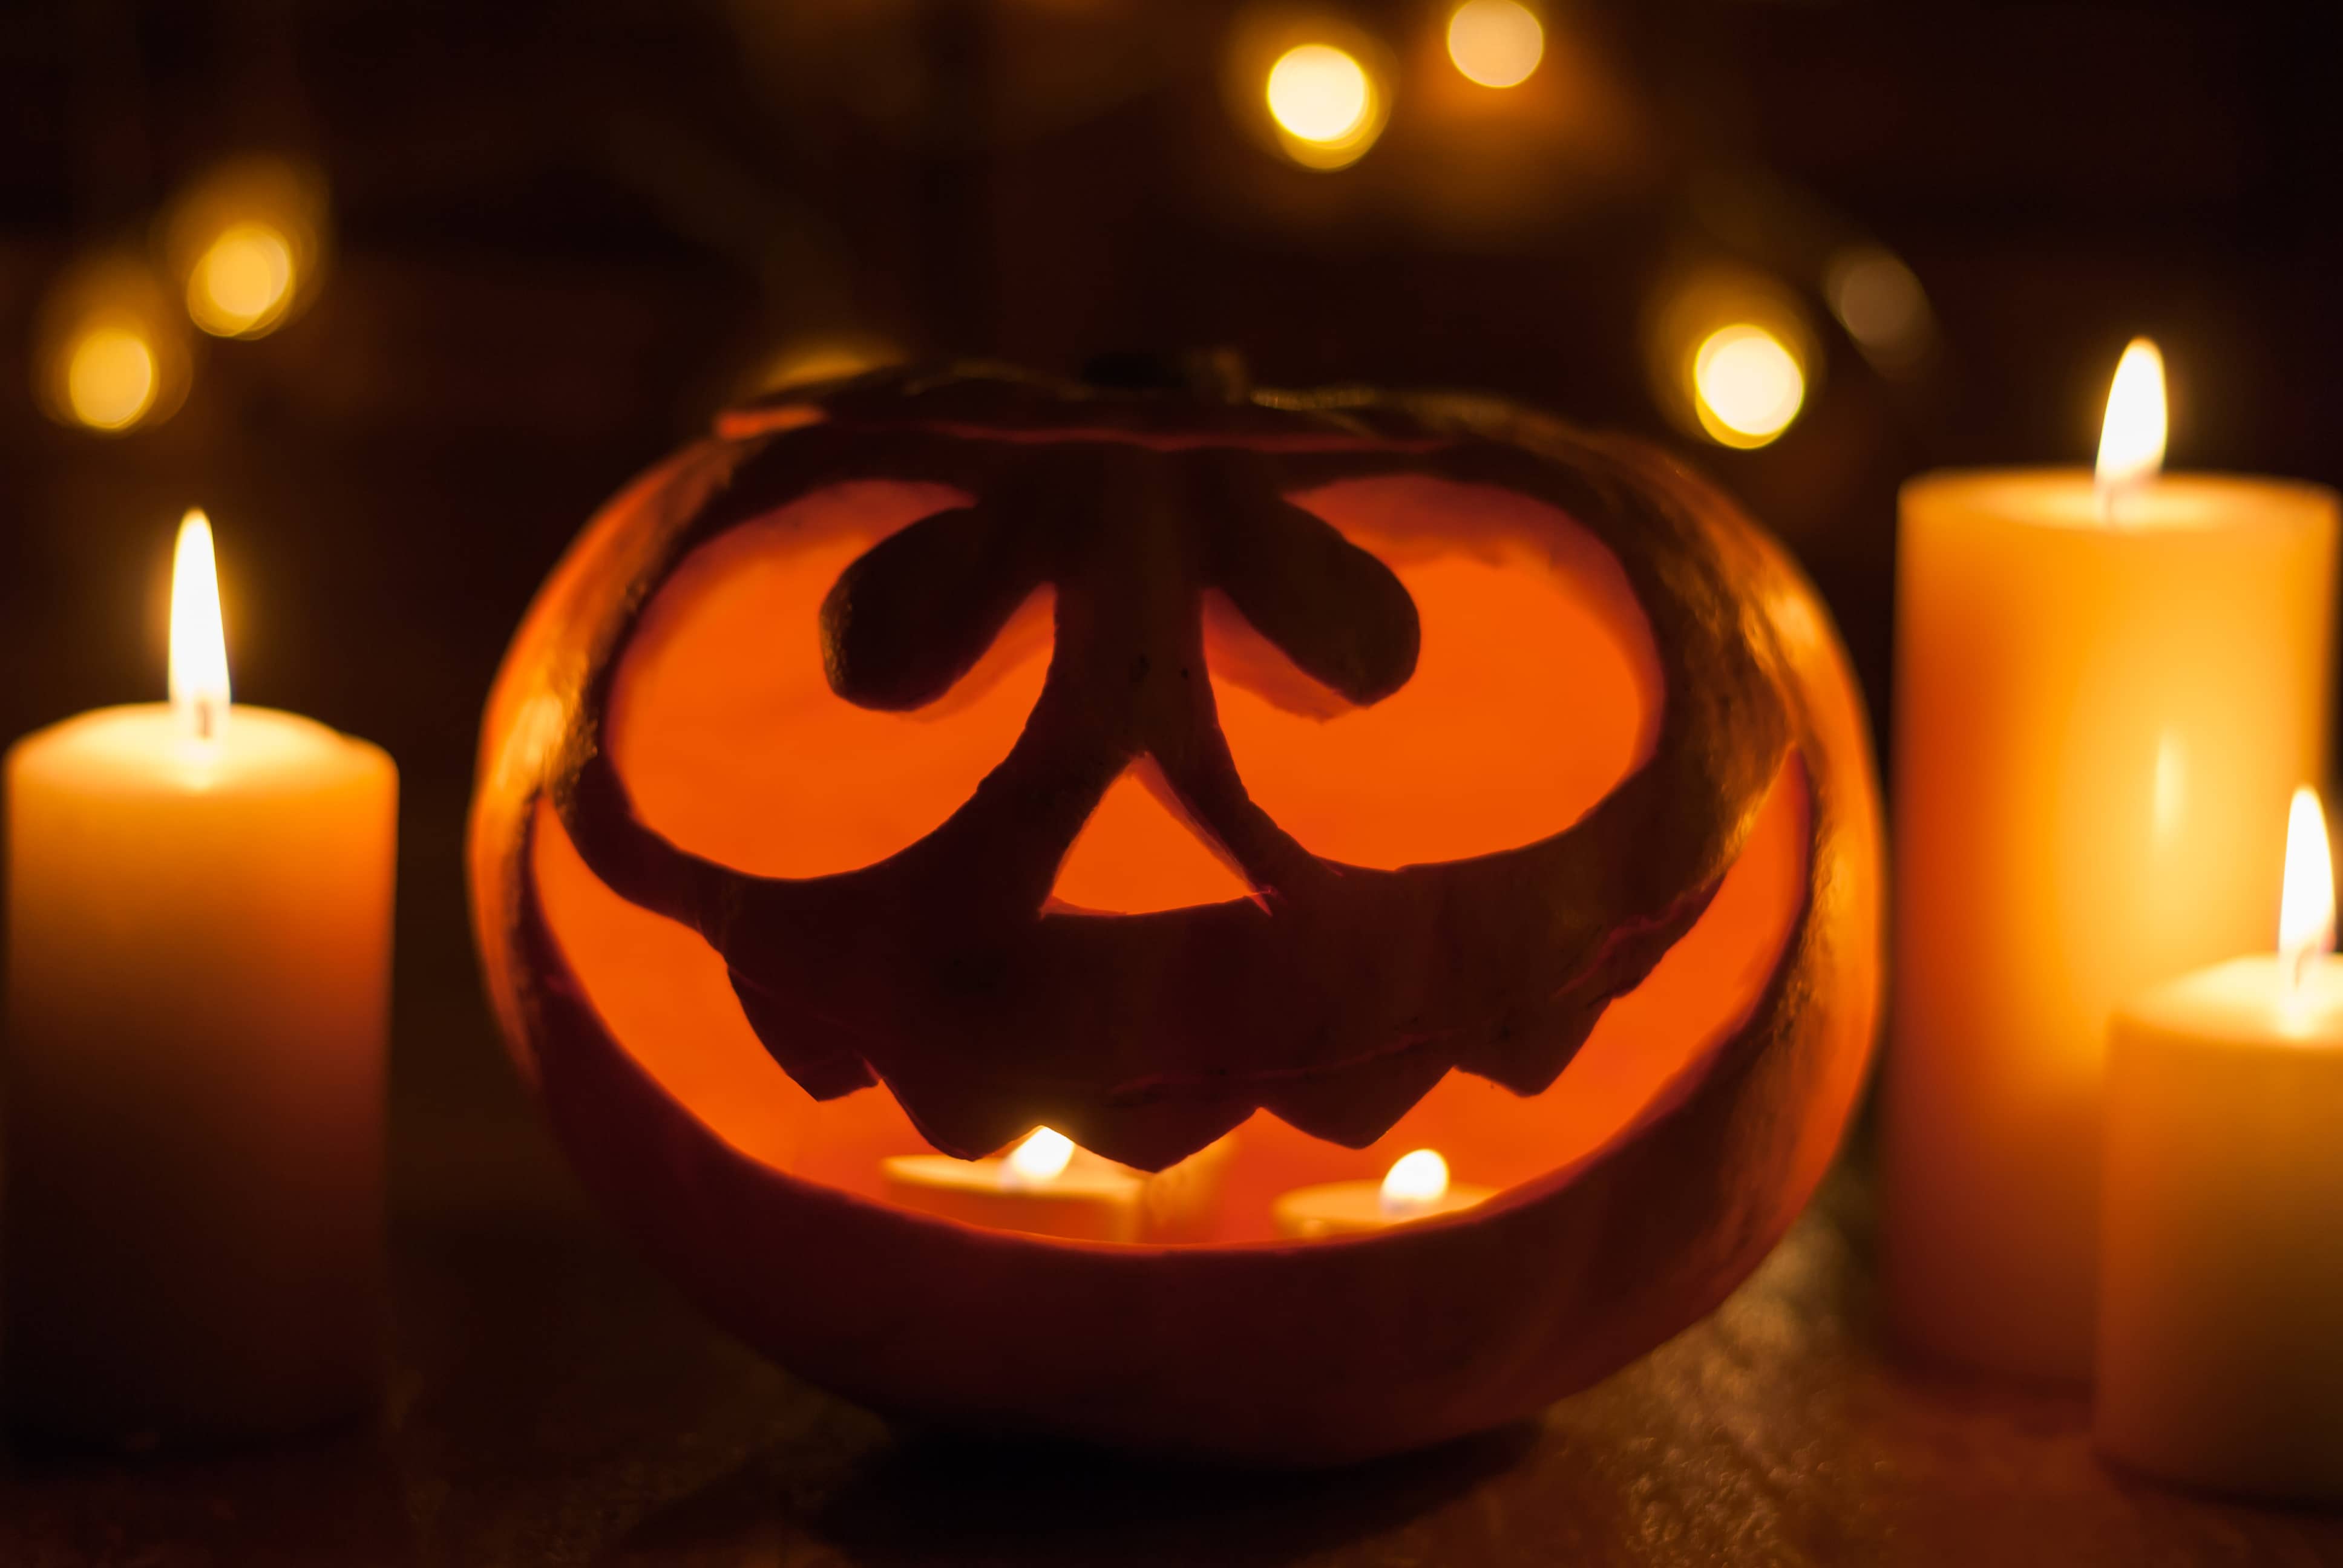 Halloween pumpkin head jack lantern with burning candles around staying at night near the window. 